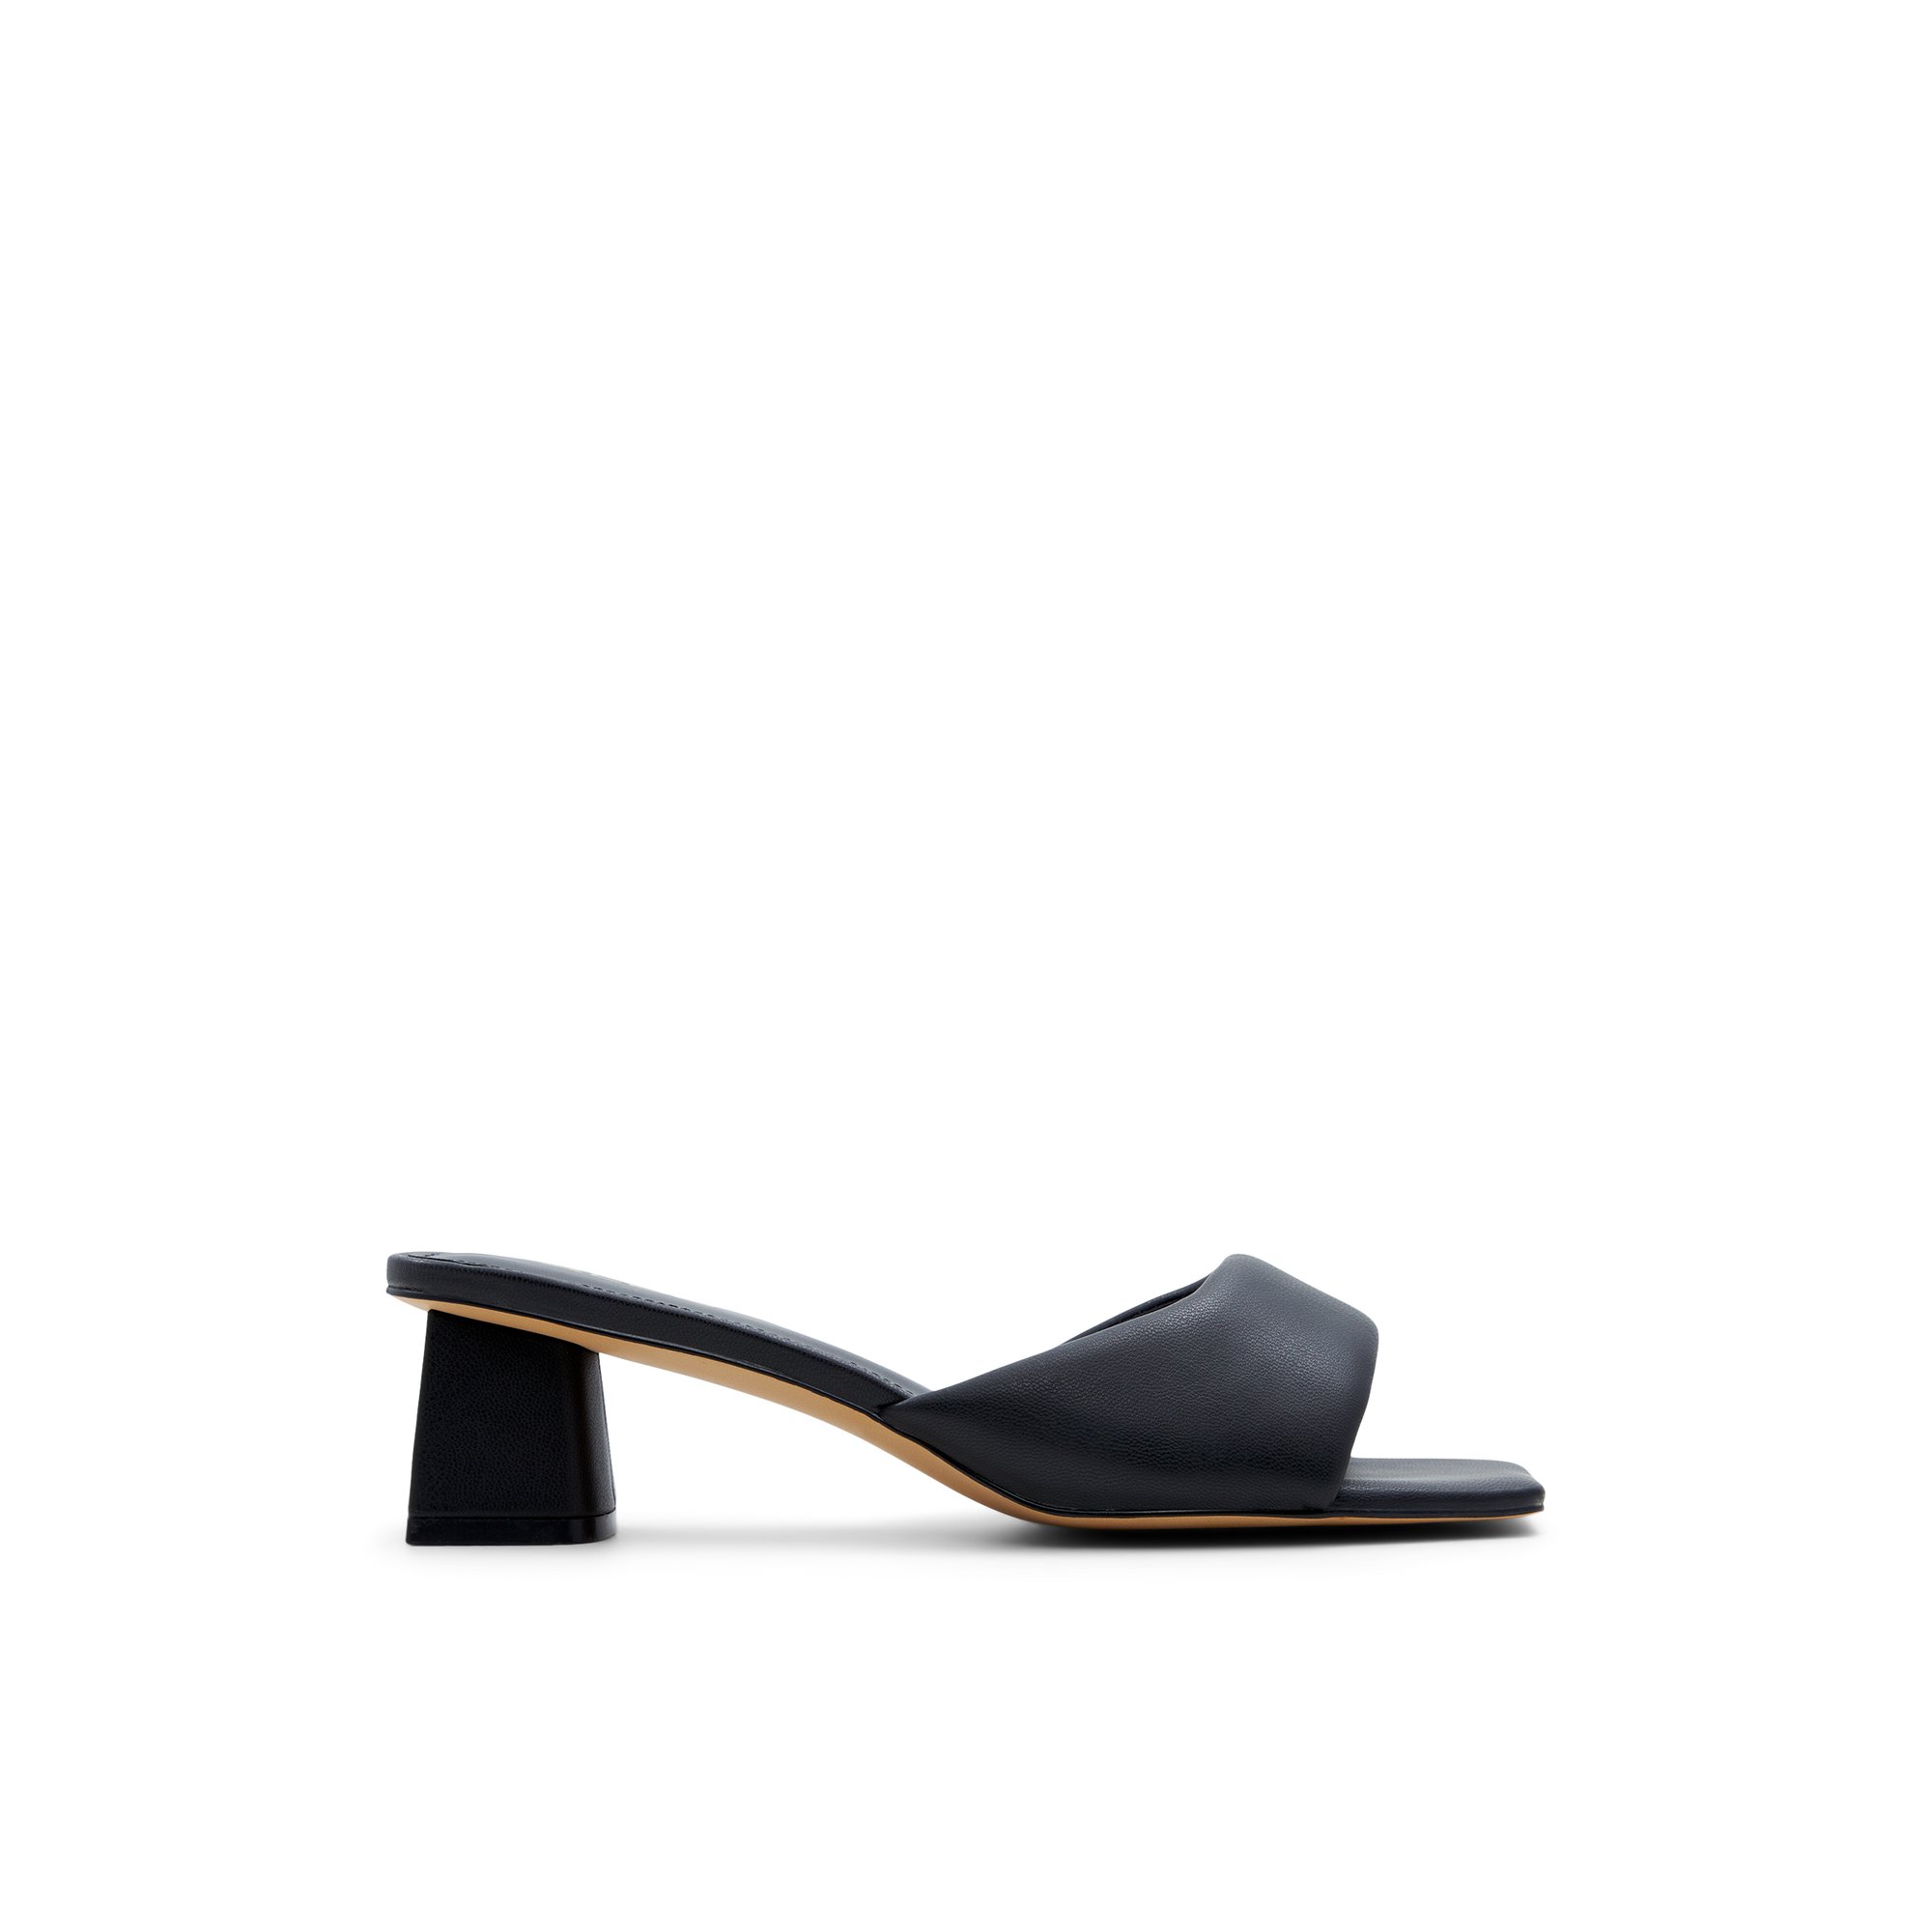 ALDO Aneka - Women's Mule Slides - Black